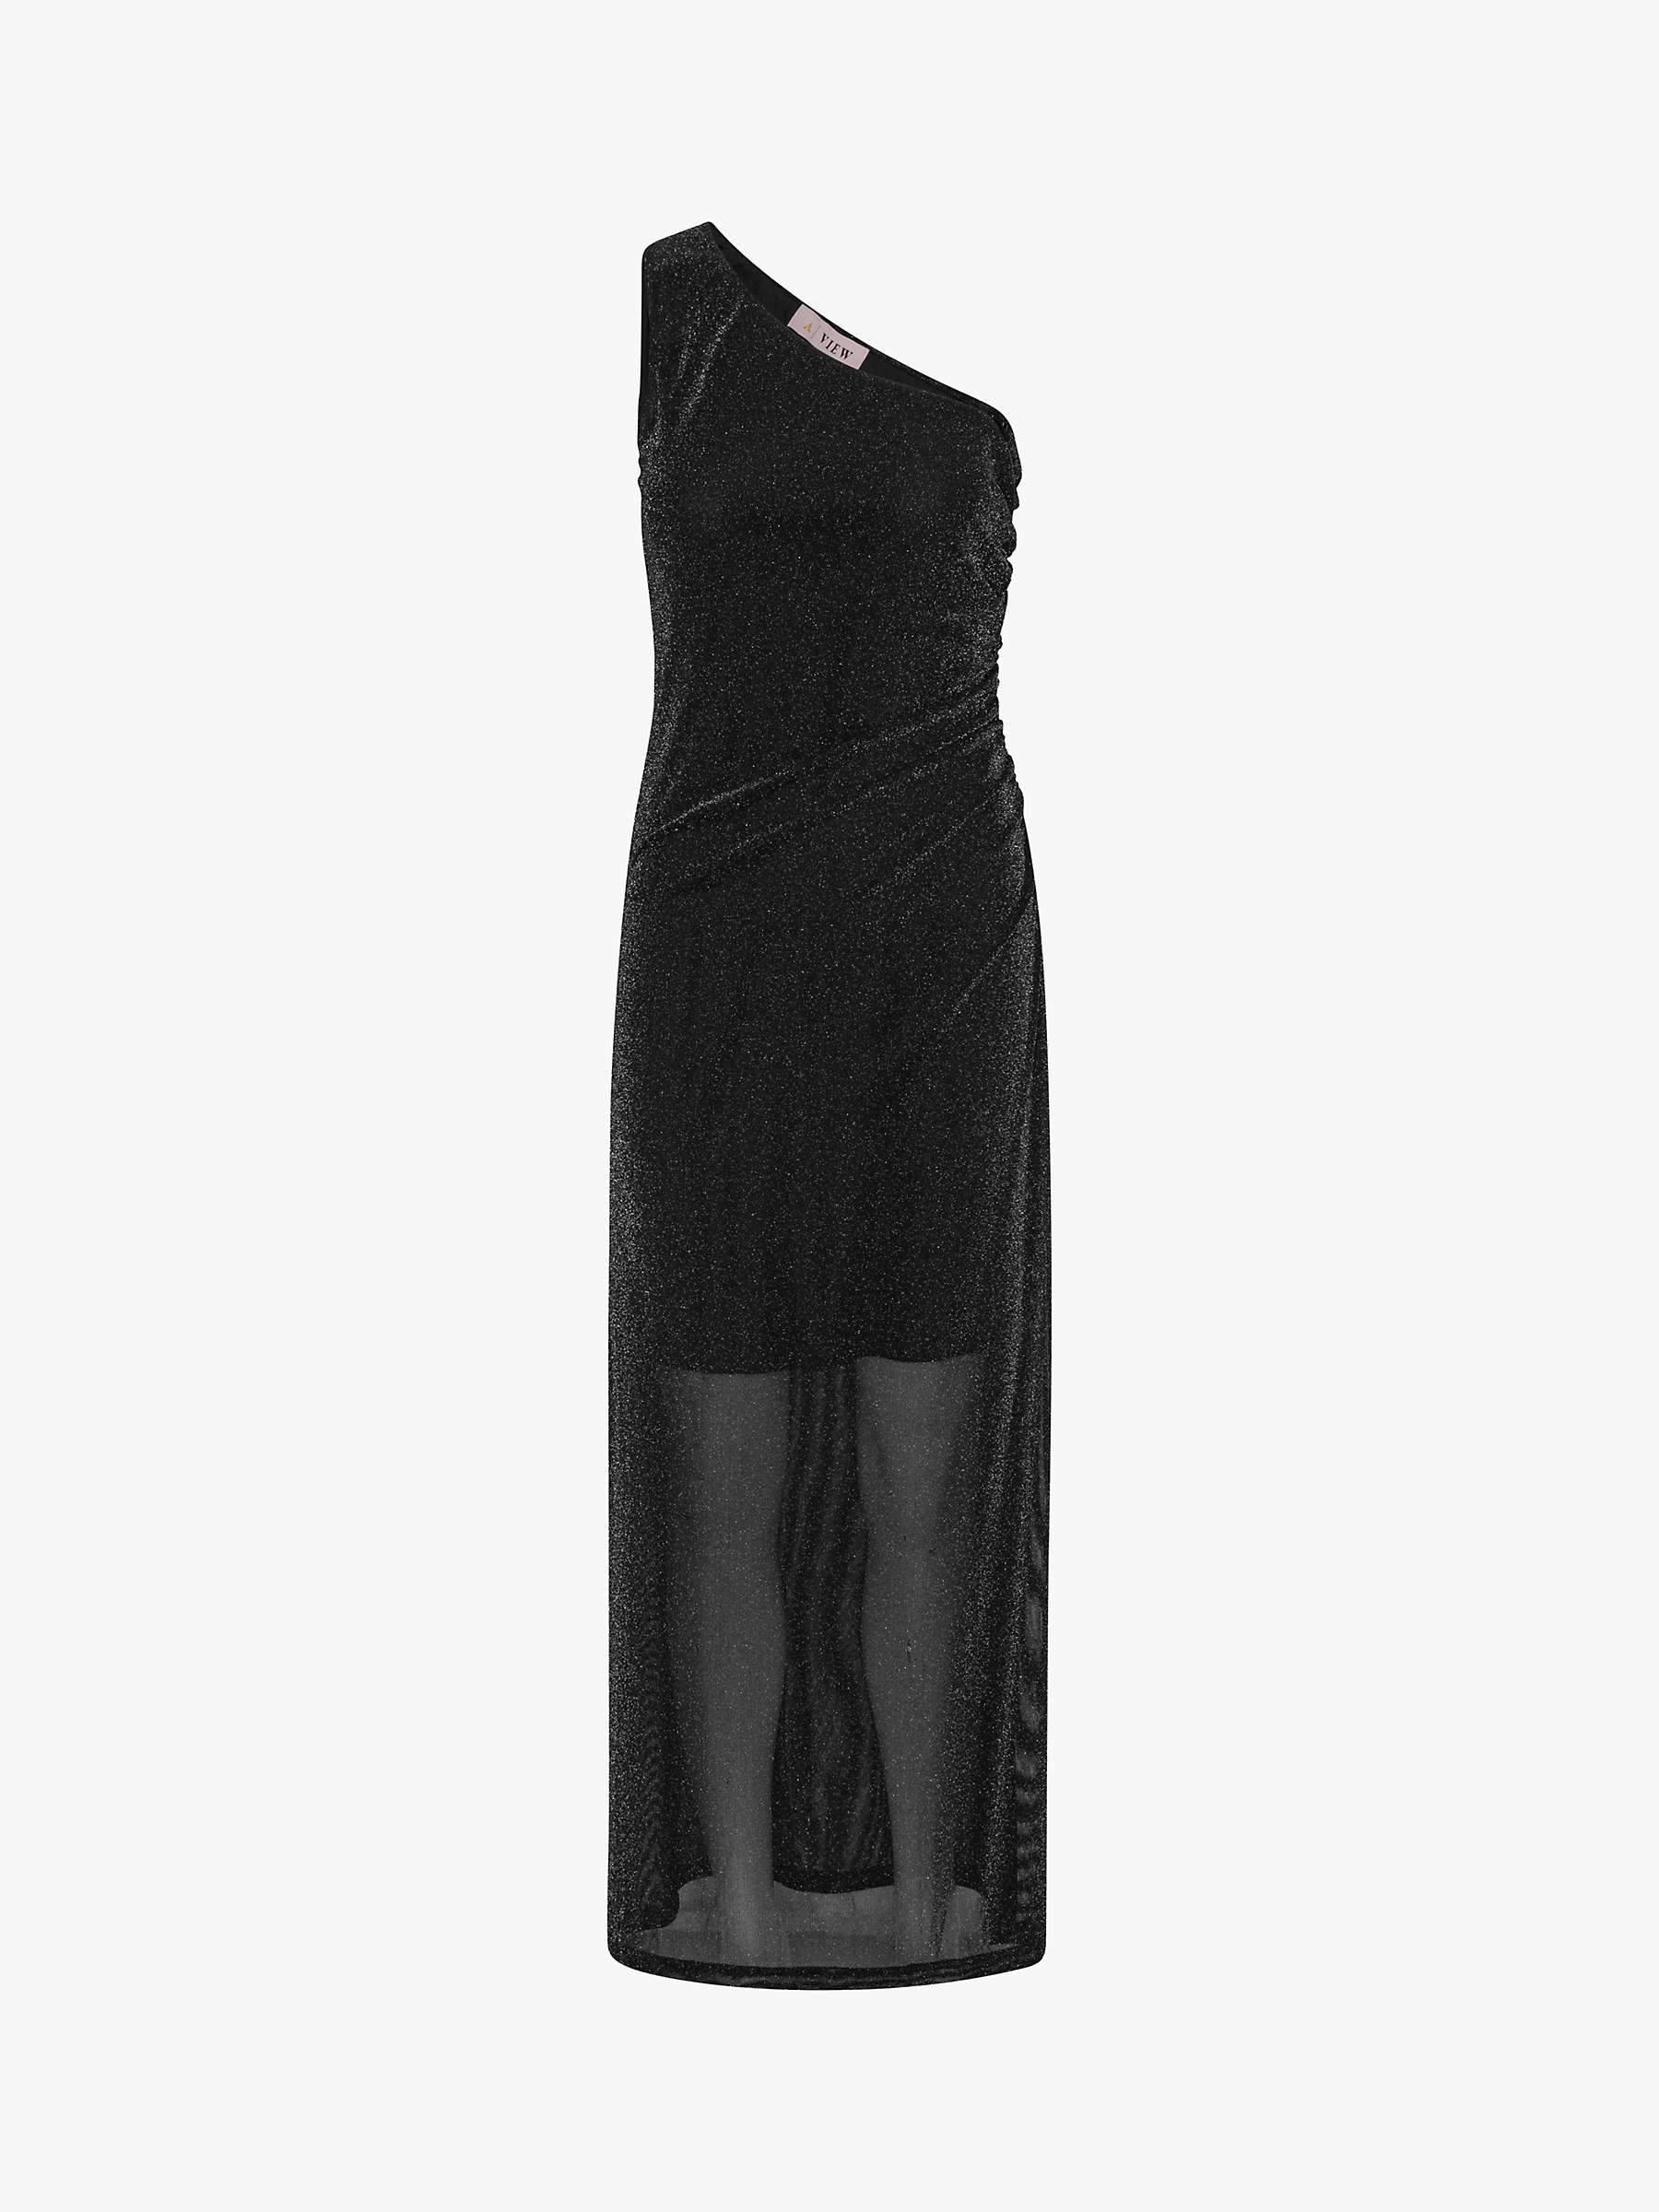 A-VIEW Passion Side Slit Maxi Dress, Black at John Lewis & Partners